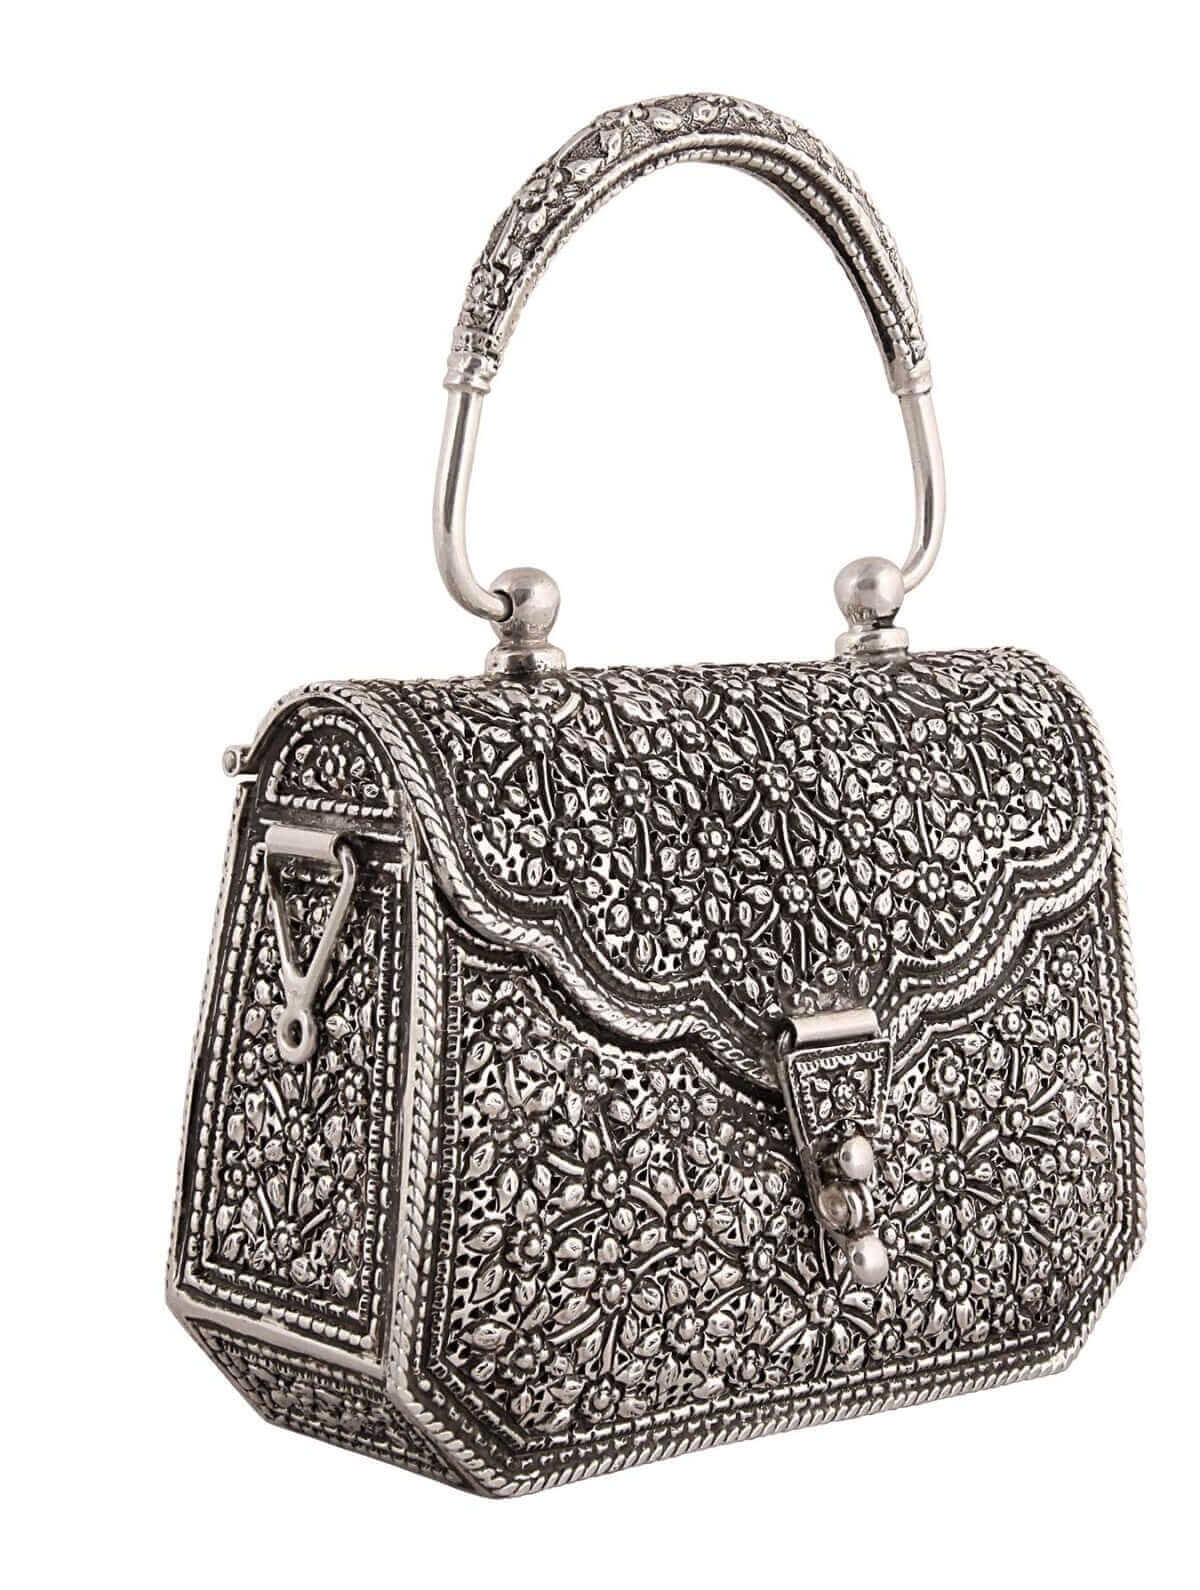 New Ladies Silver Crystal Diamante Clutch Bag Wedding Prom Evening Handbag  Purse | eBay